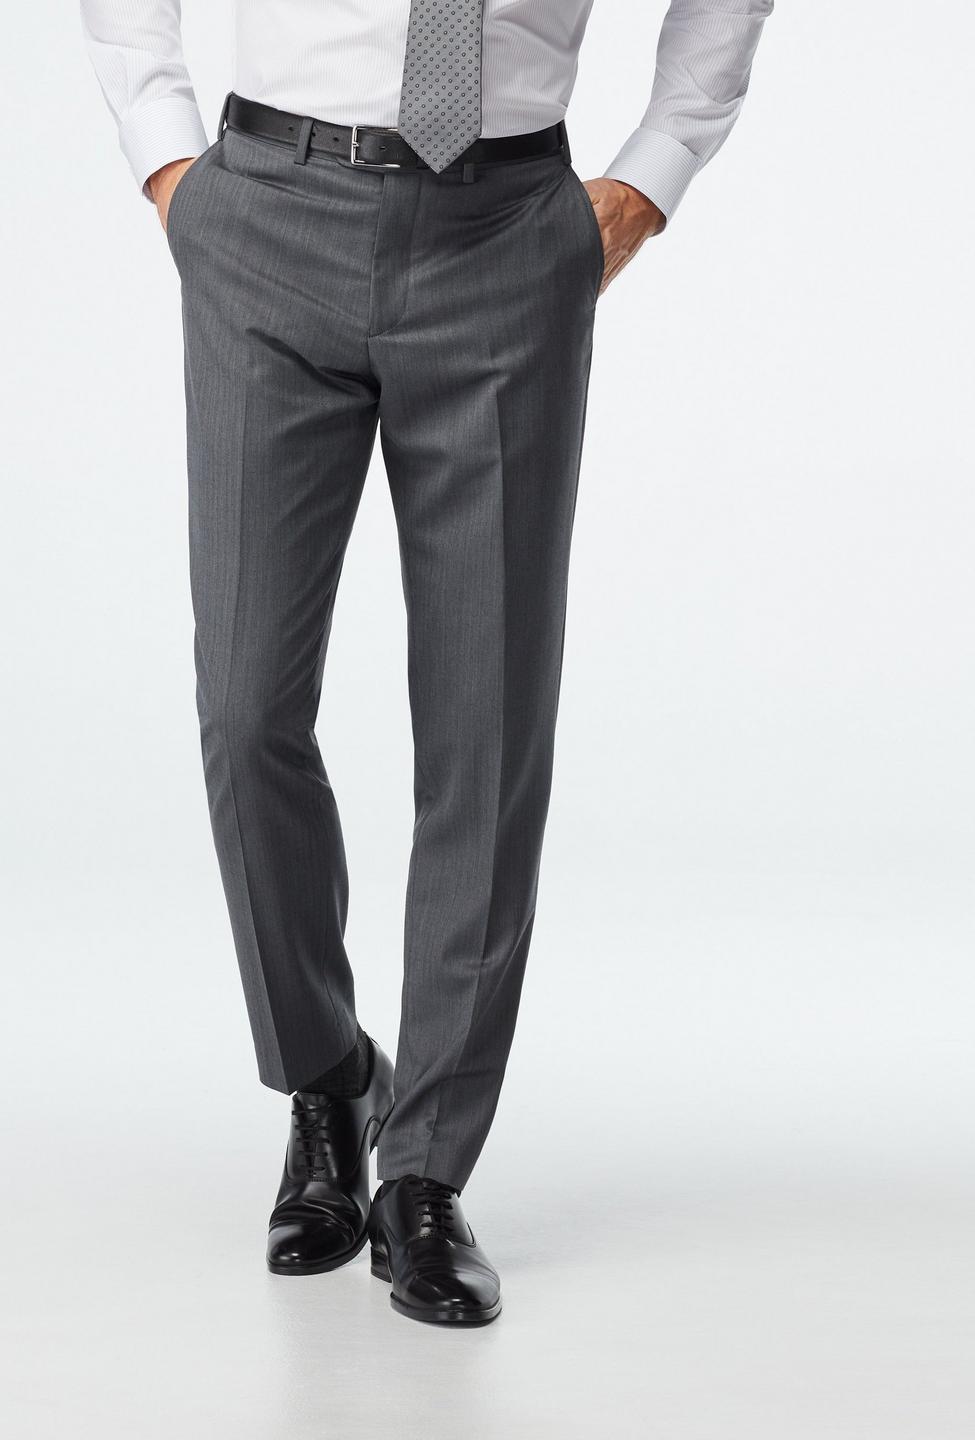 Gray pants - Highbridge Herringbone Design from Luxury Indochino Collection